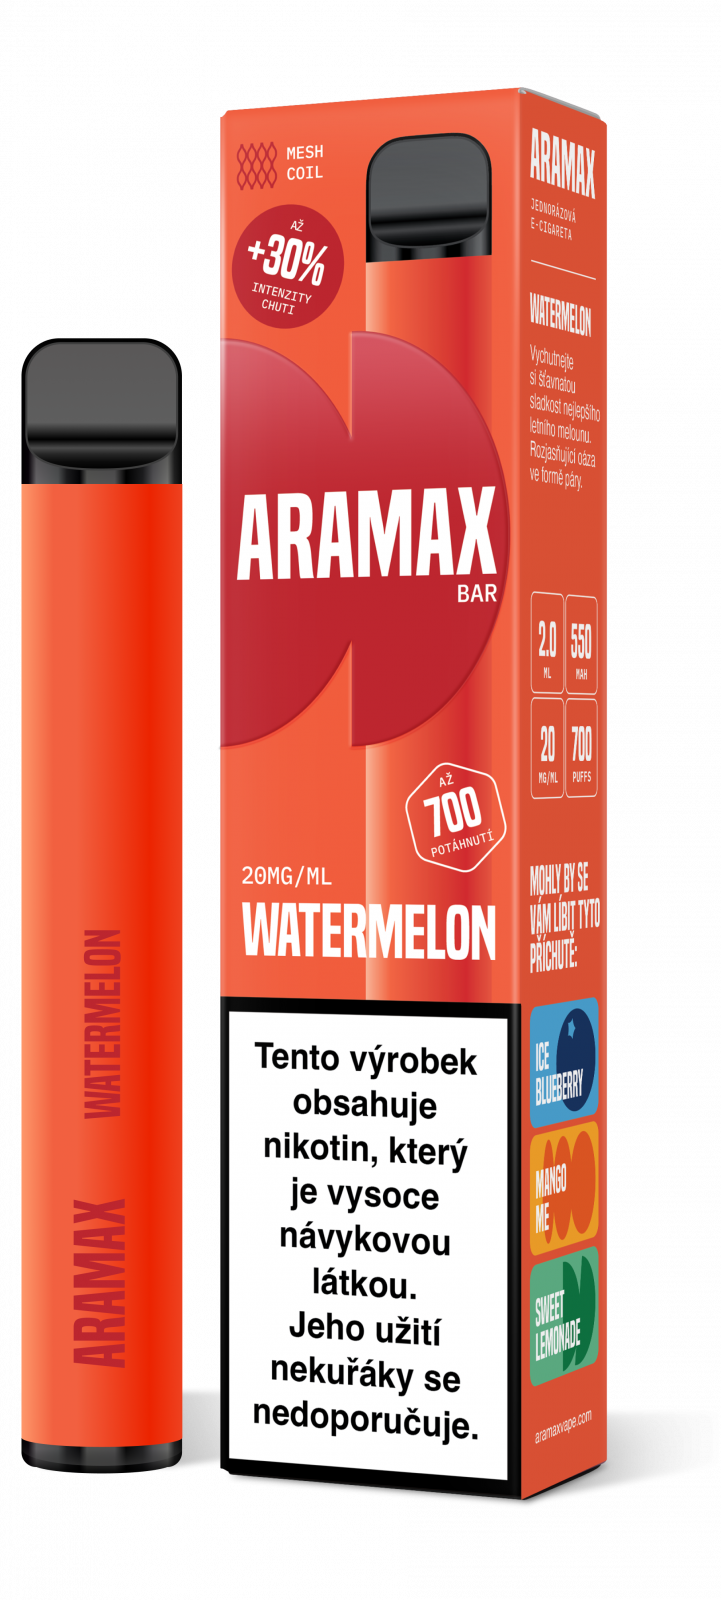 WATERMELON 20mg/ml - Aramax Bar 700